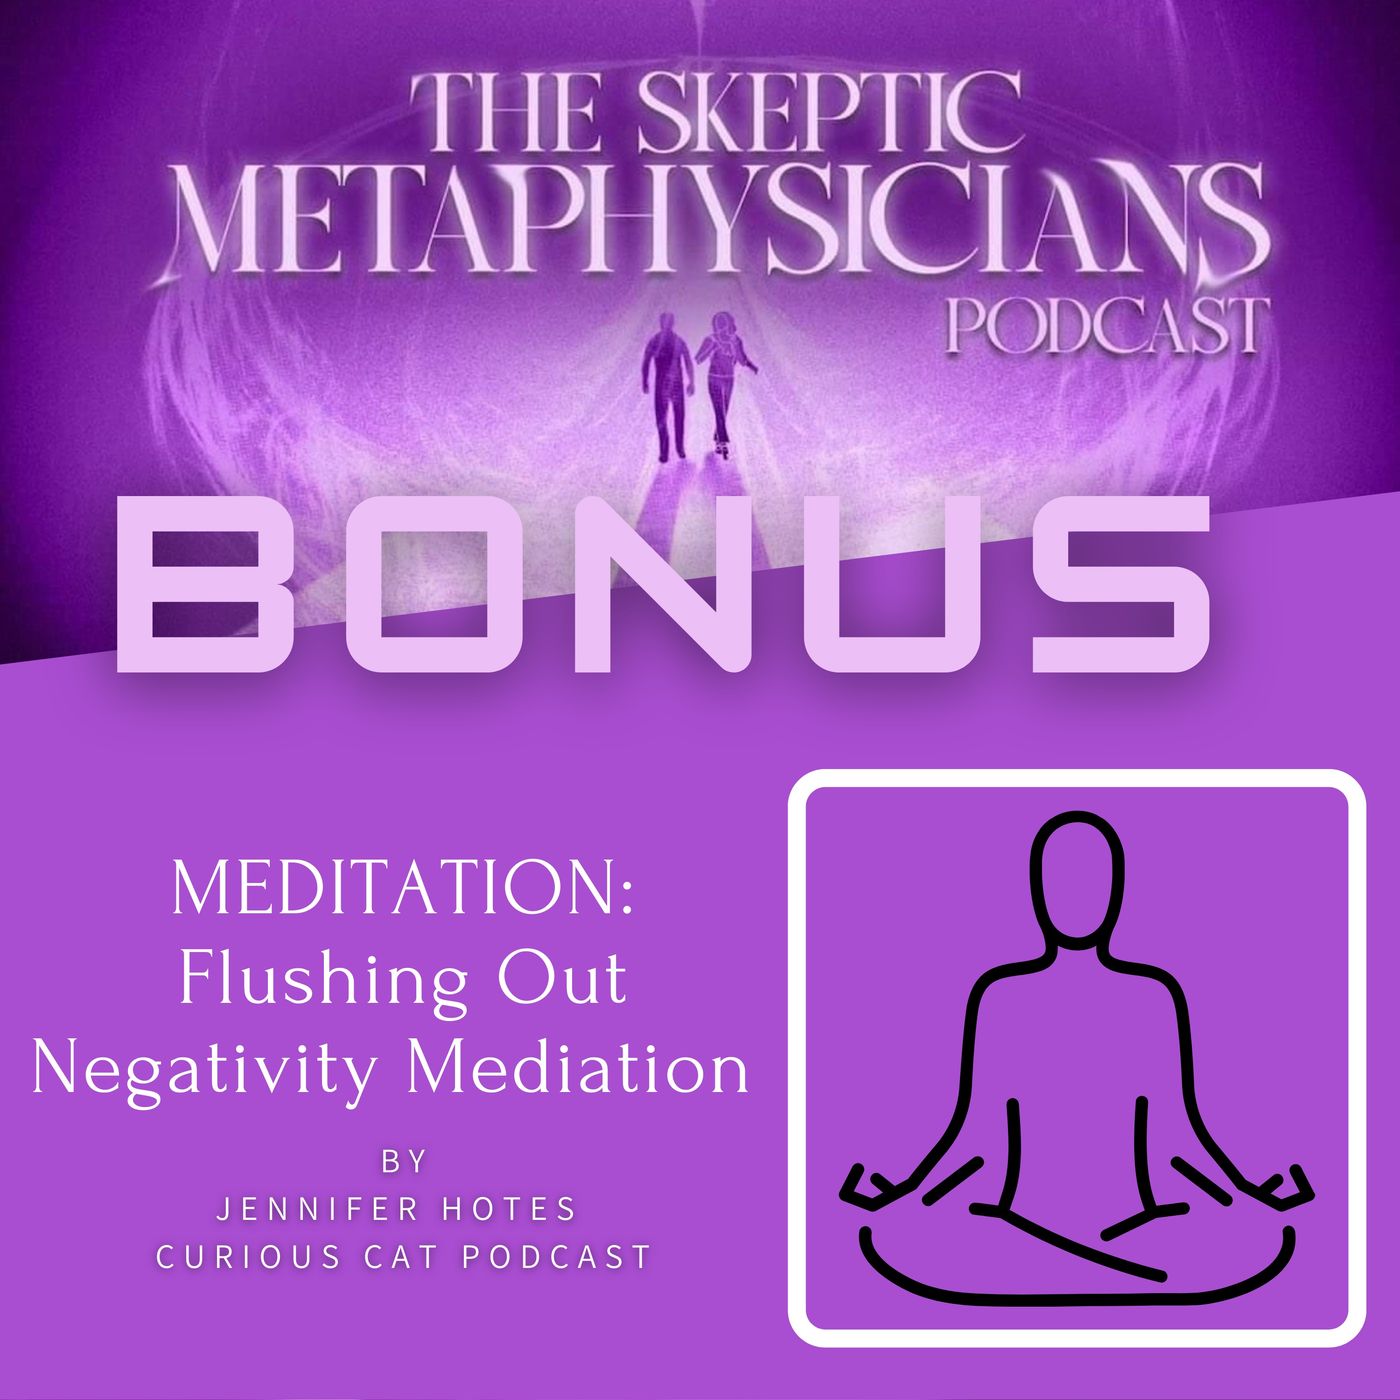 MEDITATION: Flushing Out Negativity Meditation - Jennifer Hotes/Curious Cat Podcast